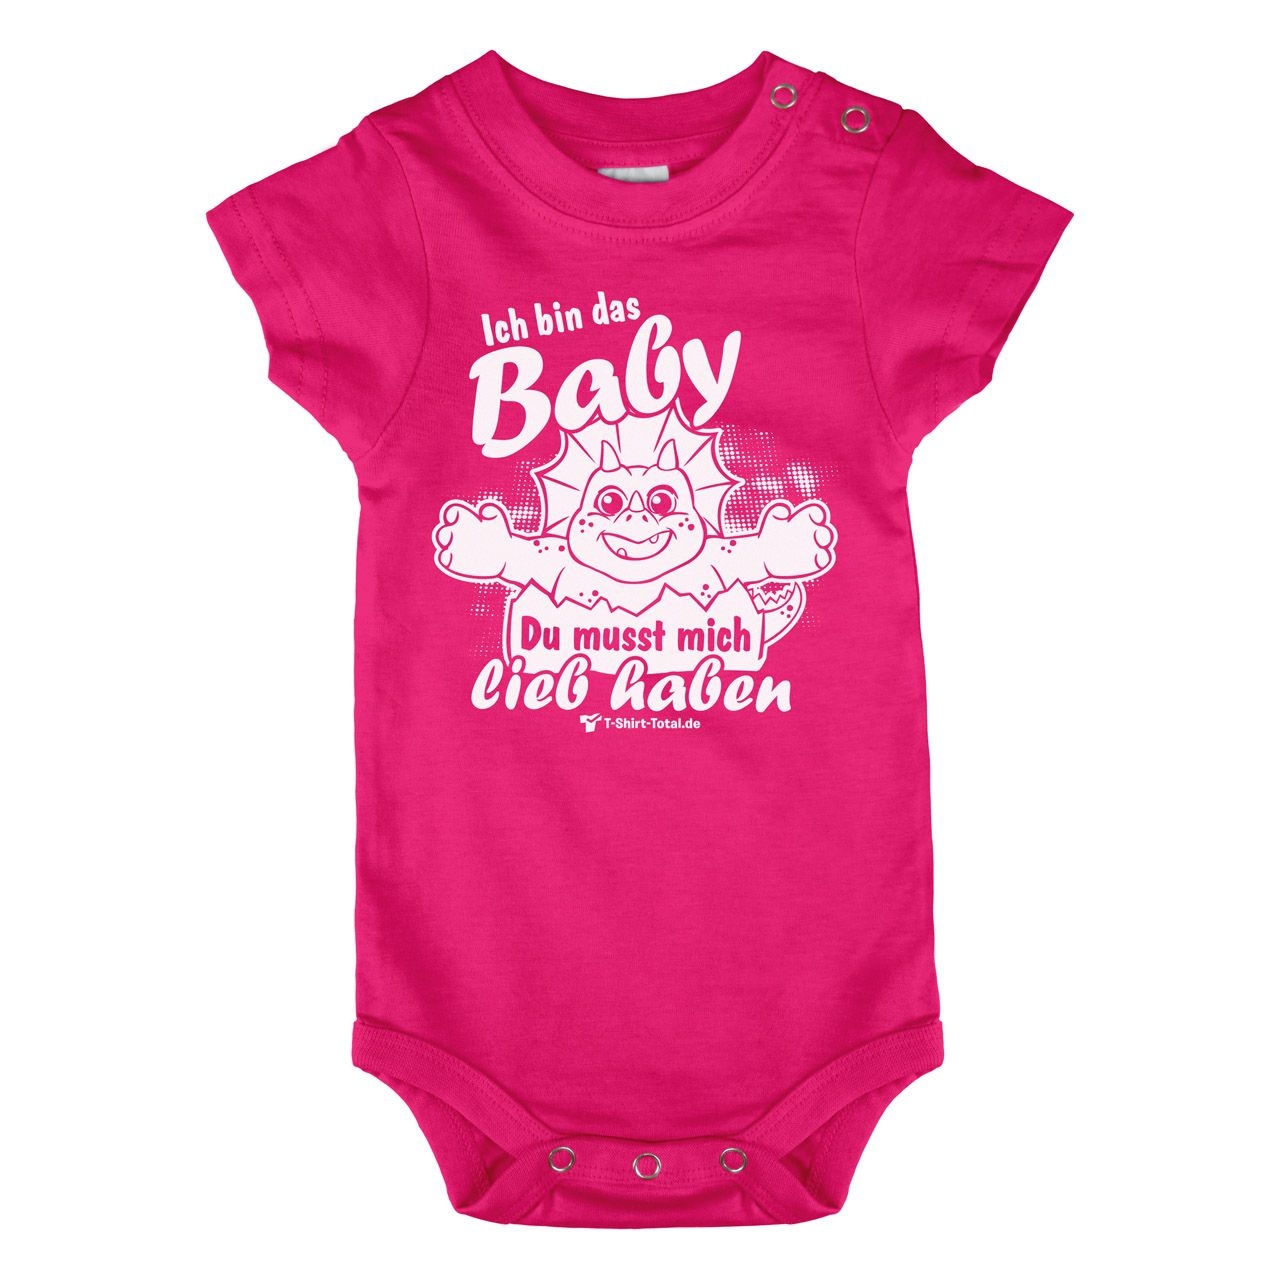 Bin das Baby Baby Body Kurzarm pink 68 / 74